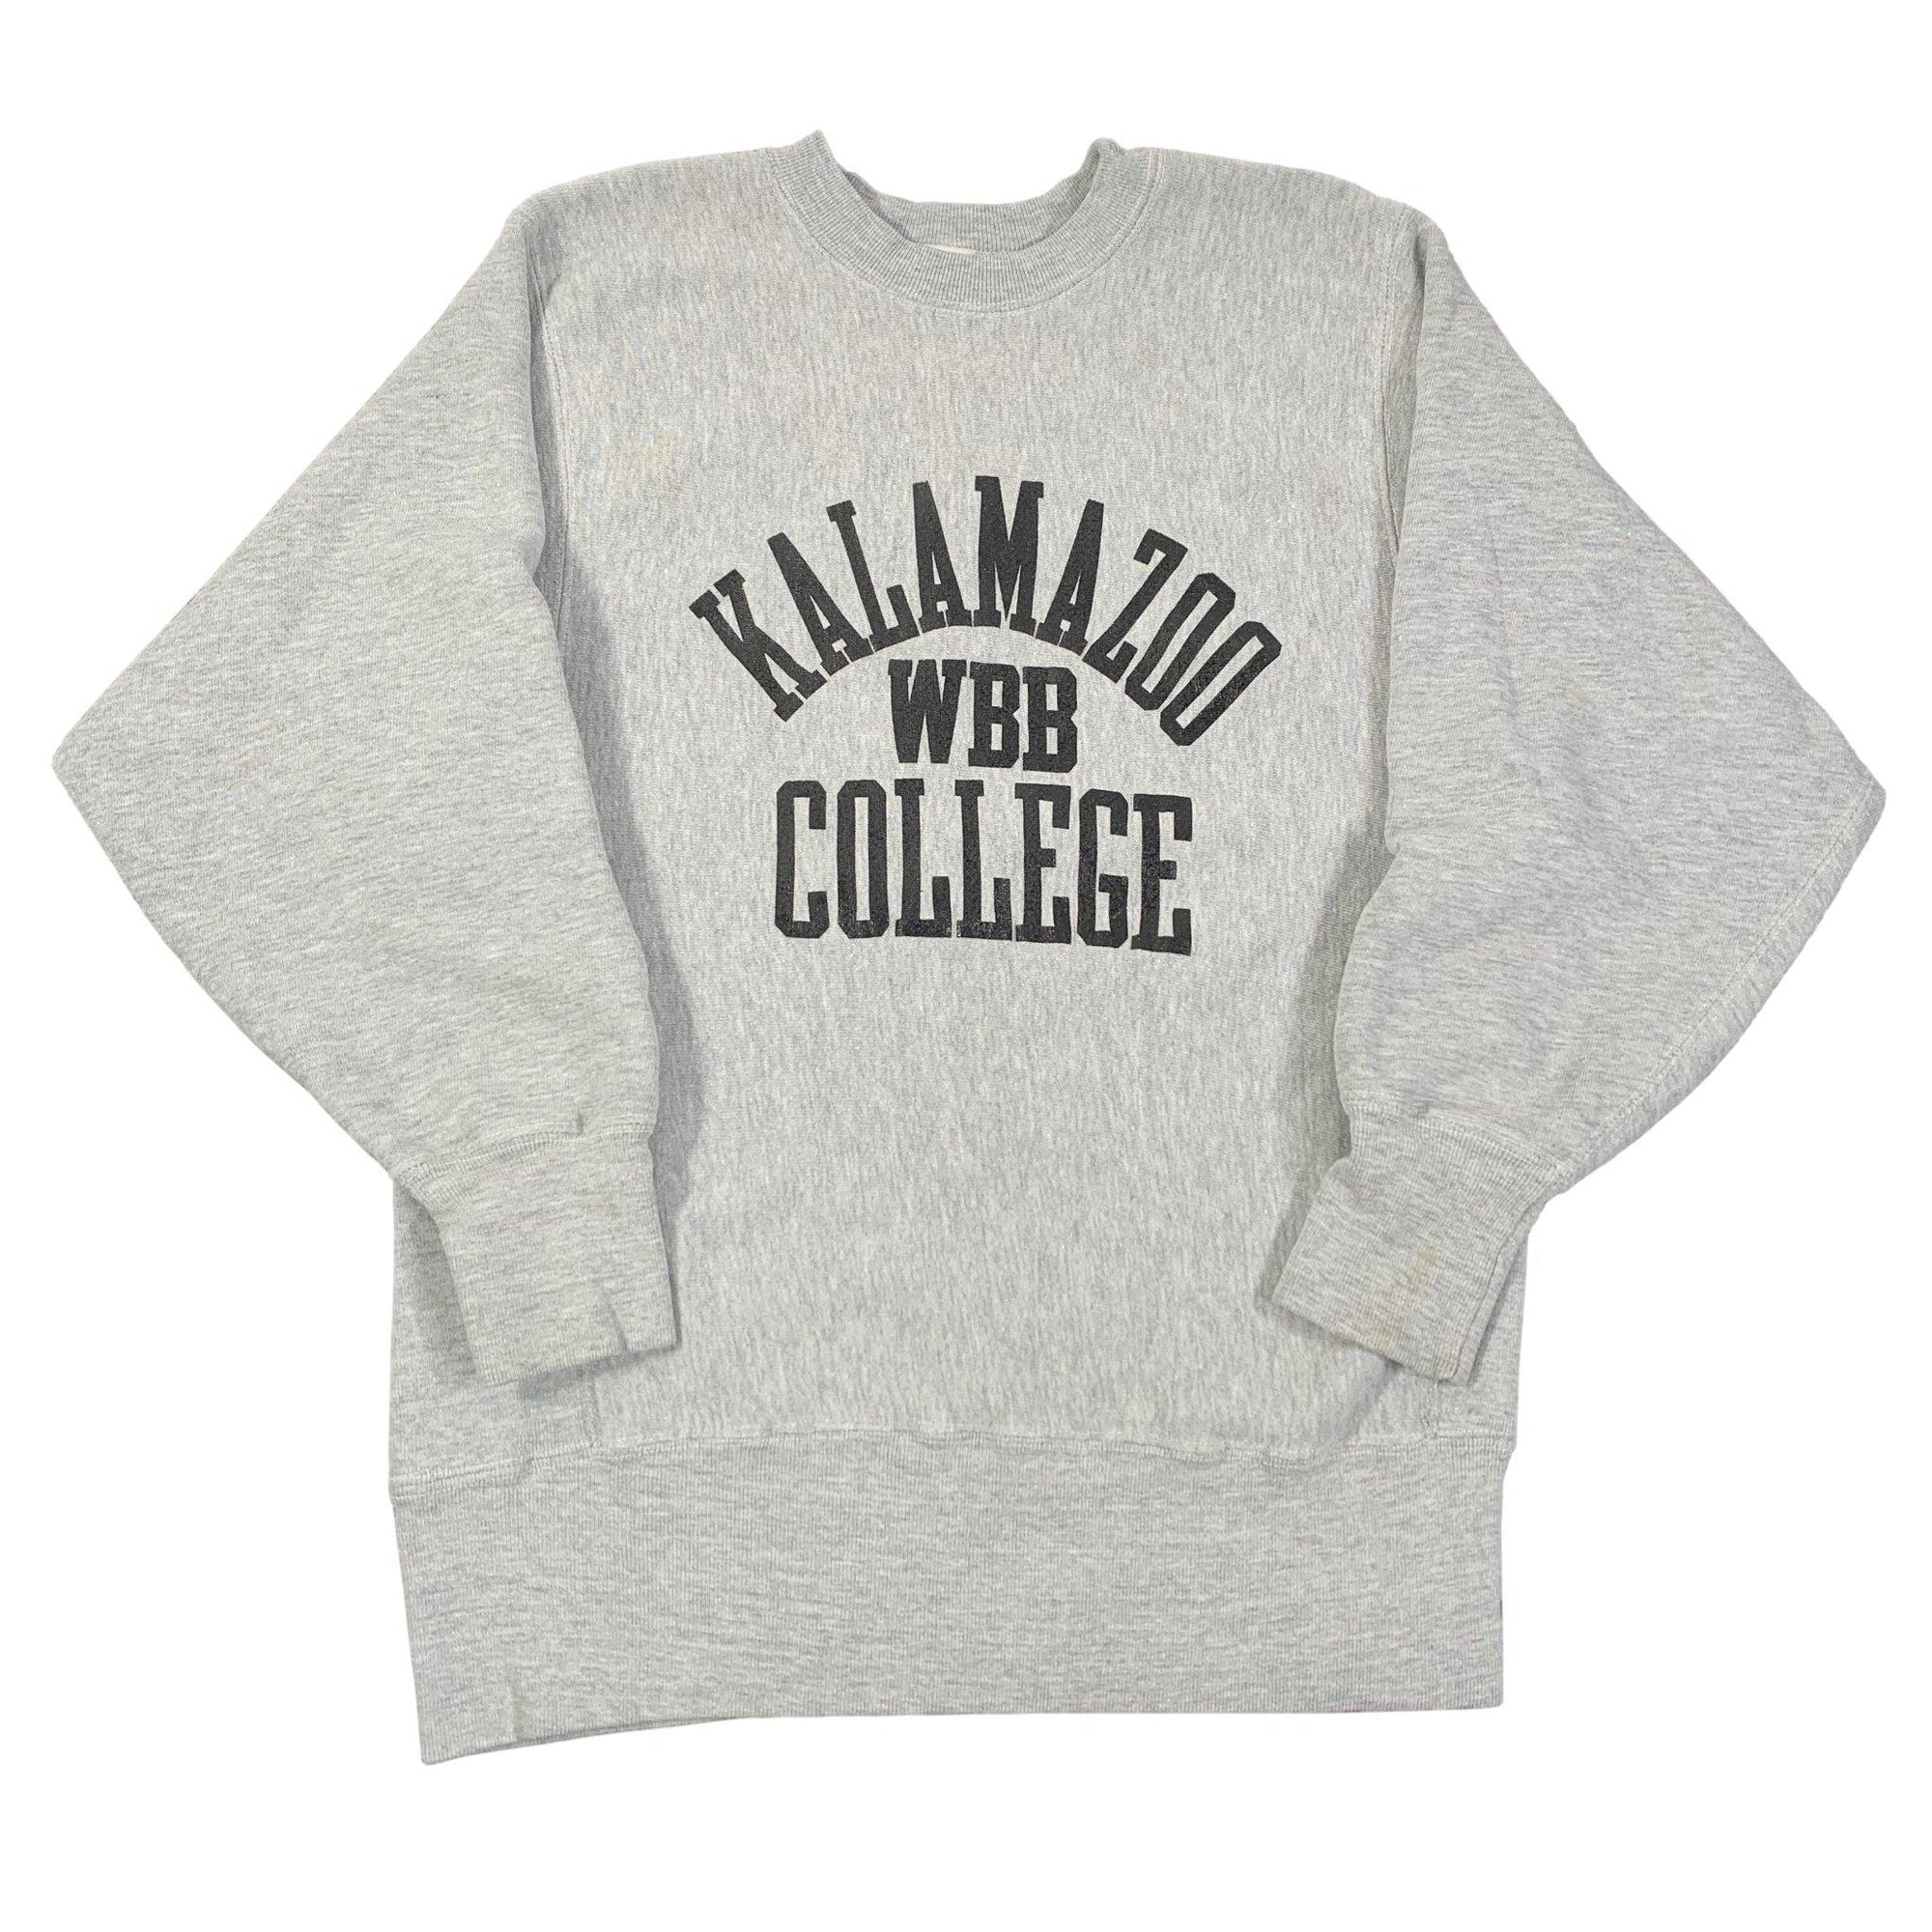 Vintage Champion Reverse Weave "Kalamazoo College" Crewneck Sweatshirt - jointcustodydc